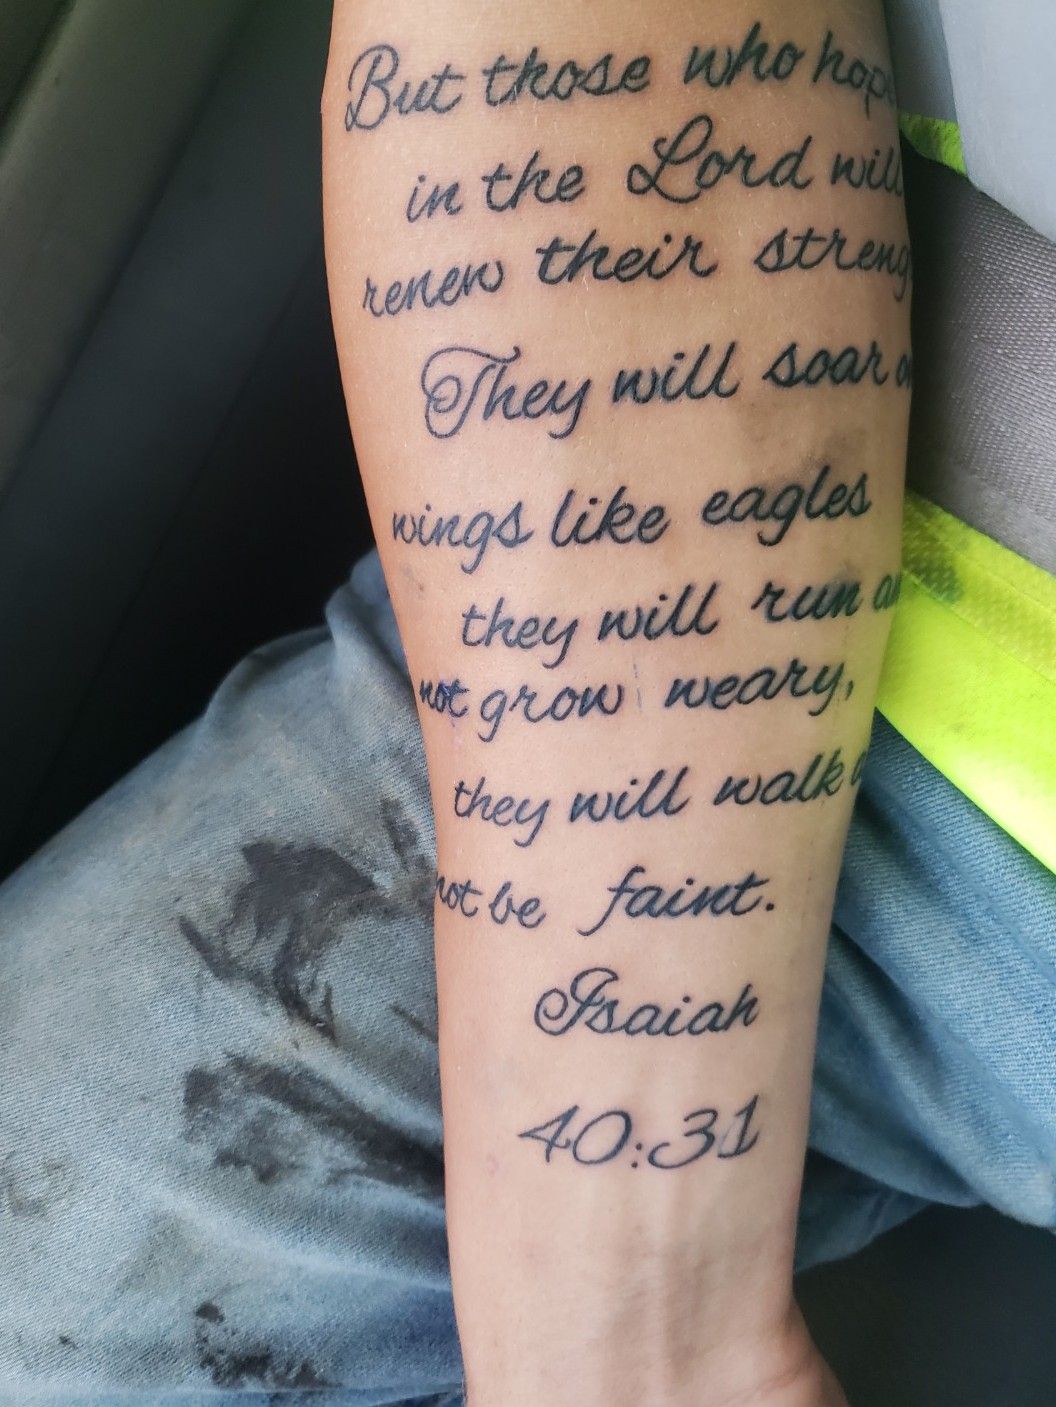 Isaiah 4031 tattoo  Beauty tattoos Tattoos Tattoo quotes